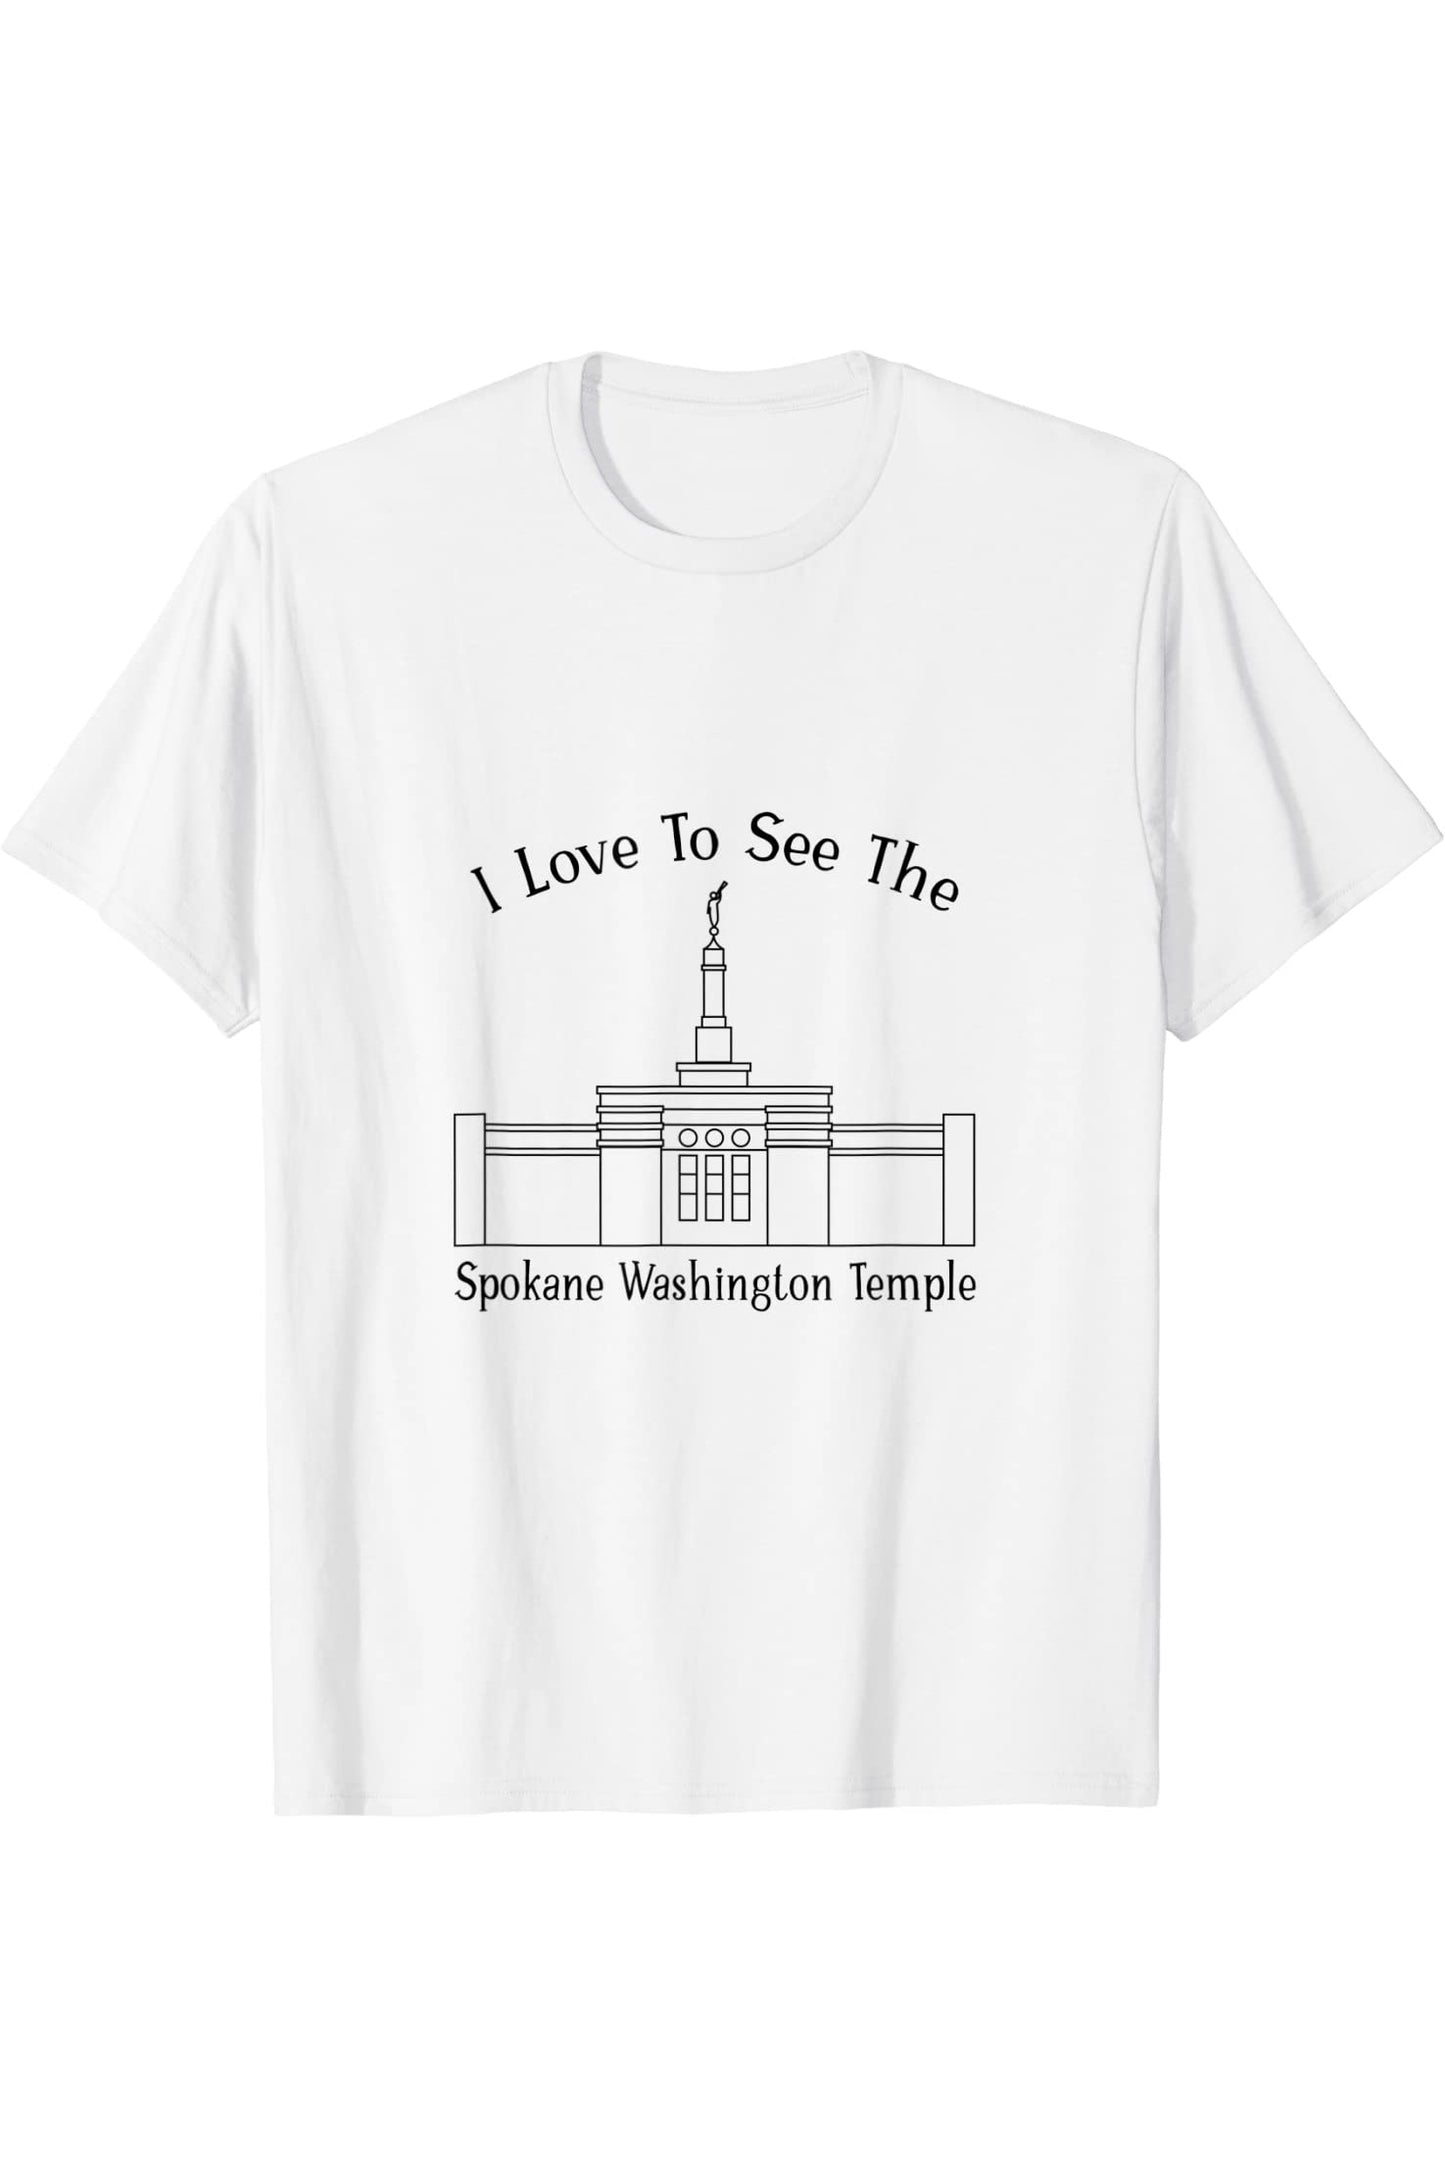 Spokane Washington Temple T-Shirt - Happy Style (English) US